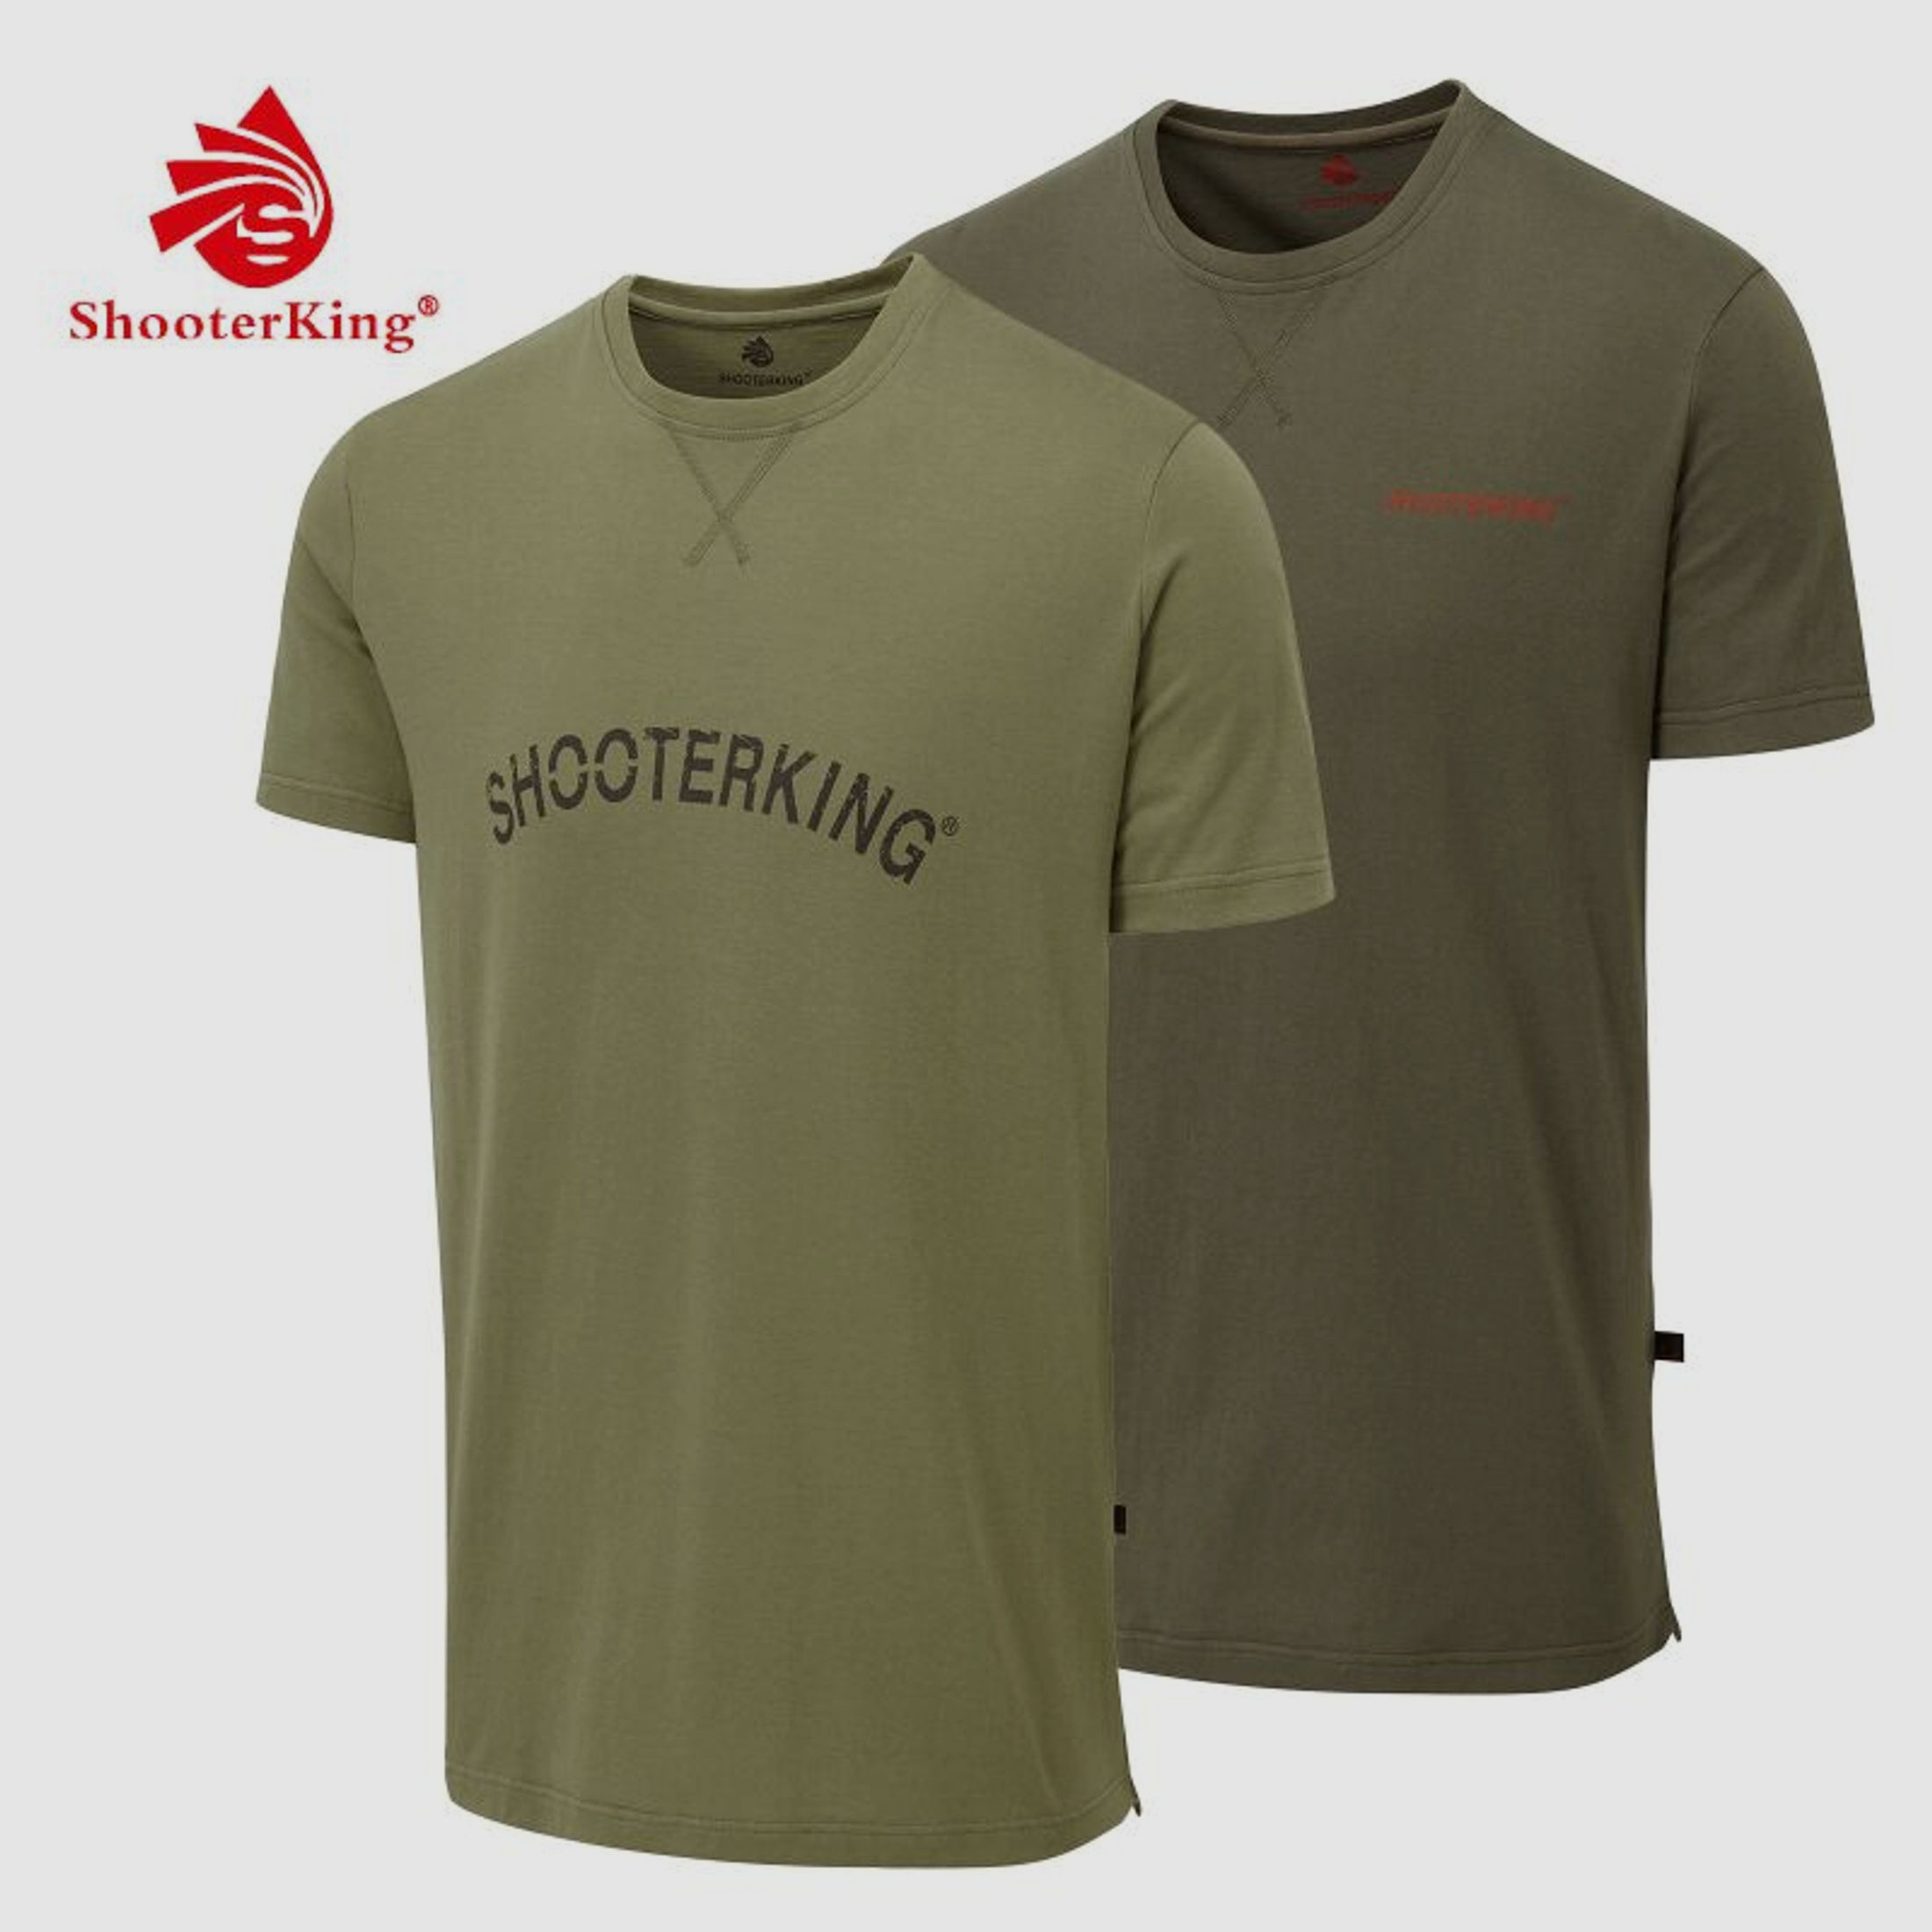 Shooterking Herren T-Shirts Outlander 2er Pack oliv/grün